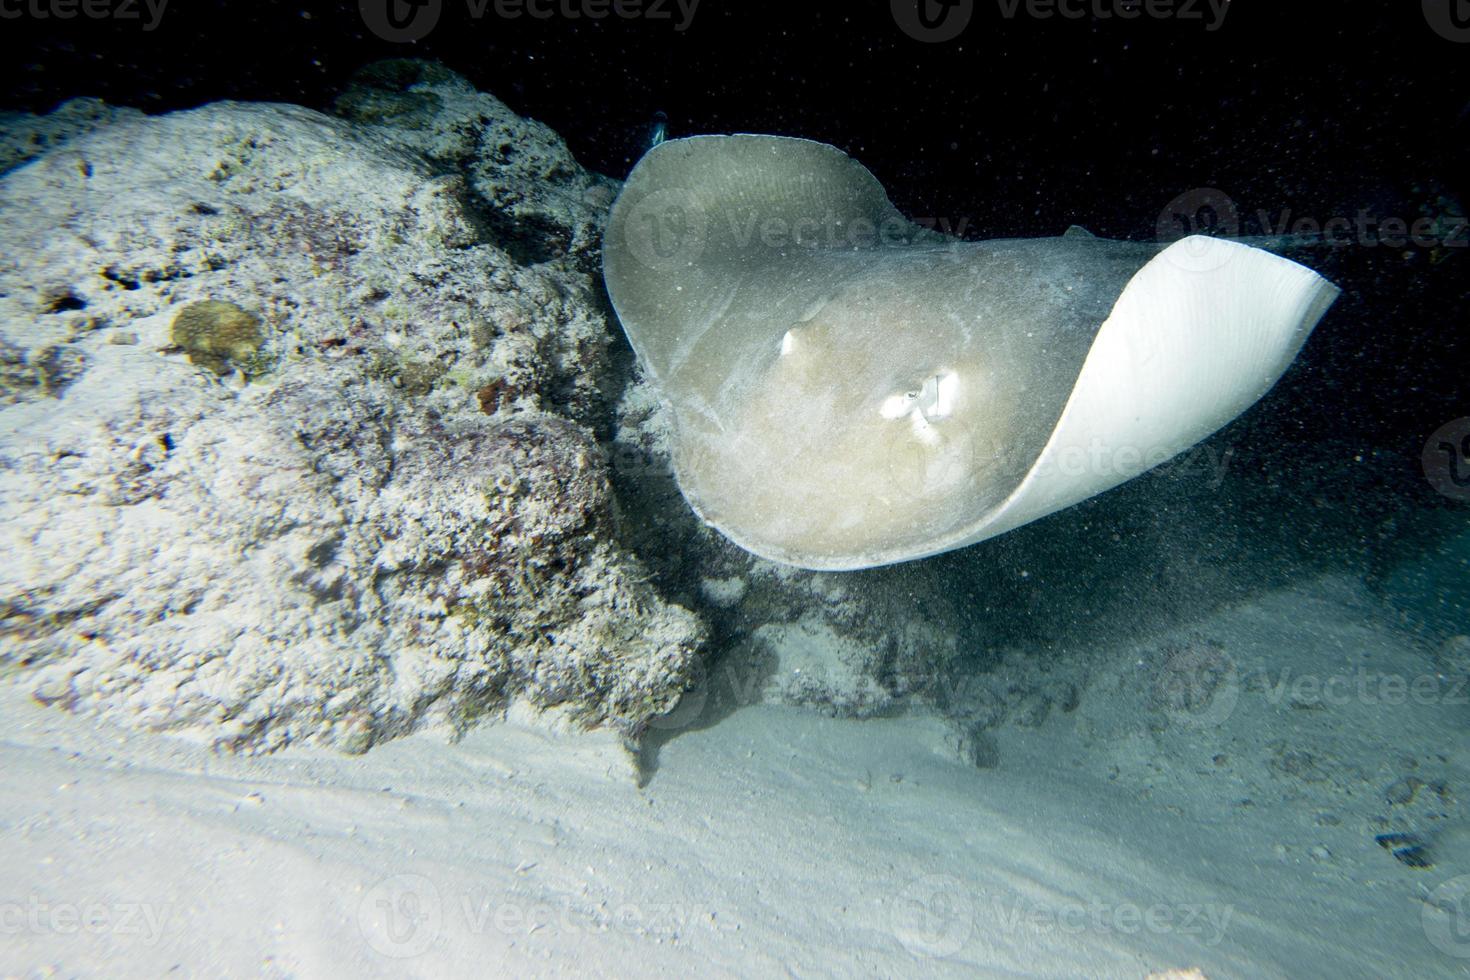 giant blackparsnip stingray fish photo